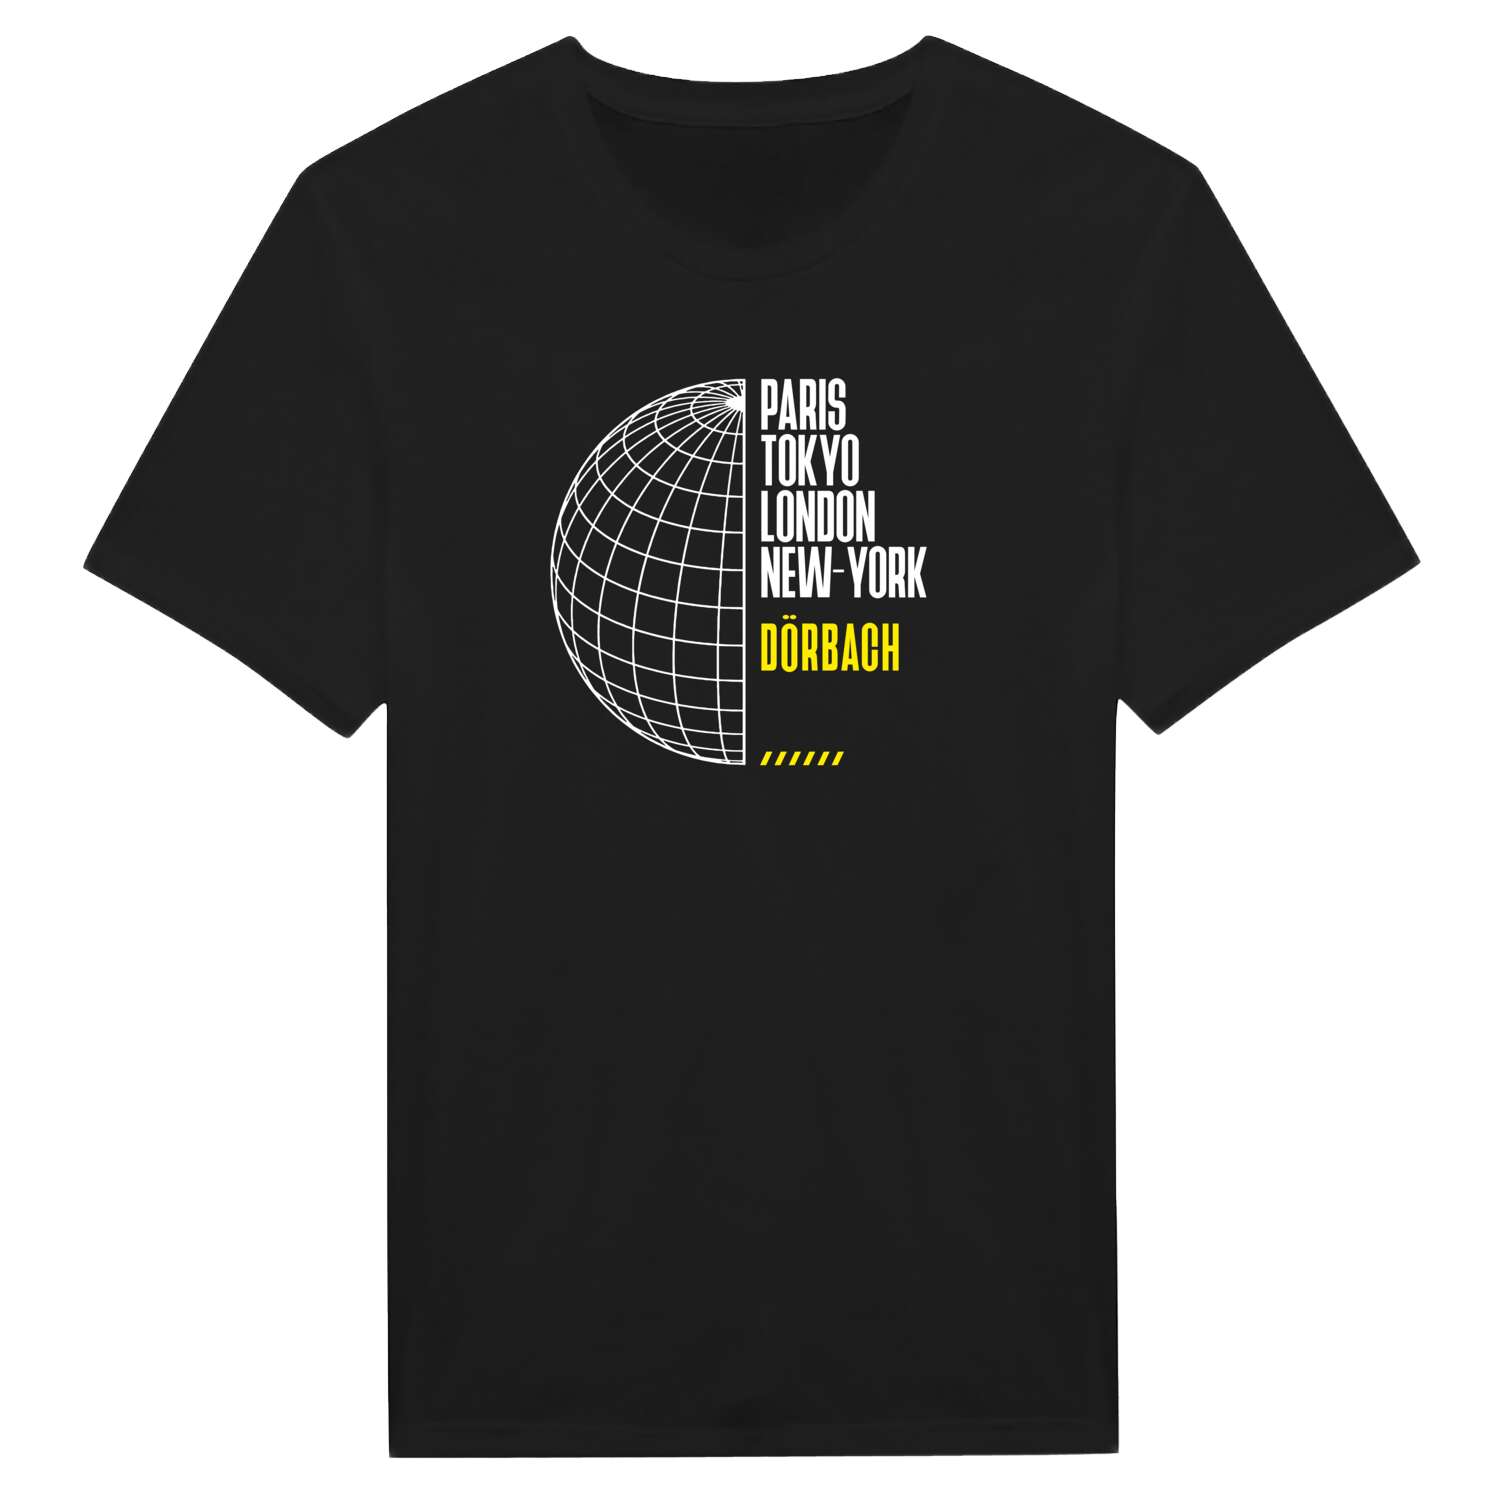 Dörbach T-Shirt »Paris Tokyo London«